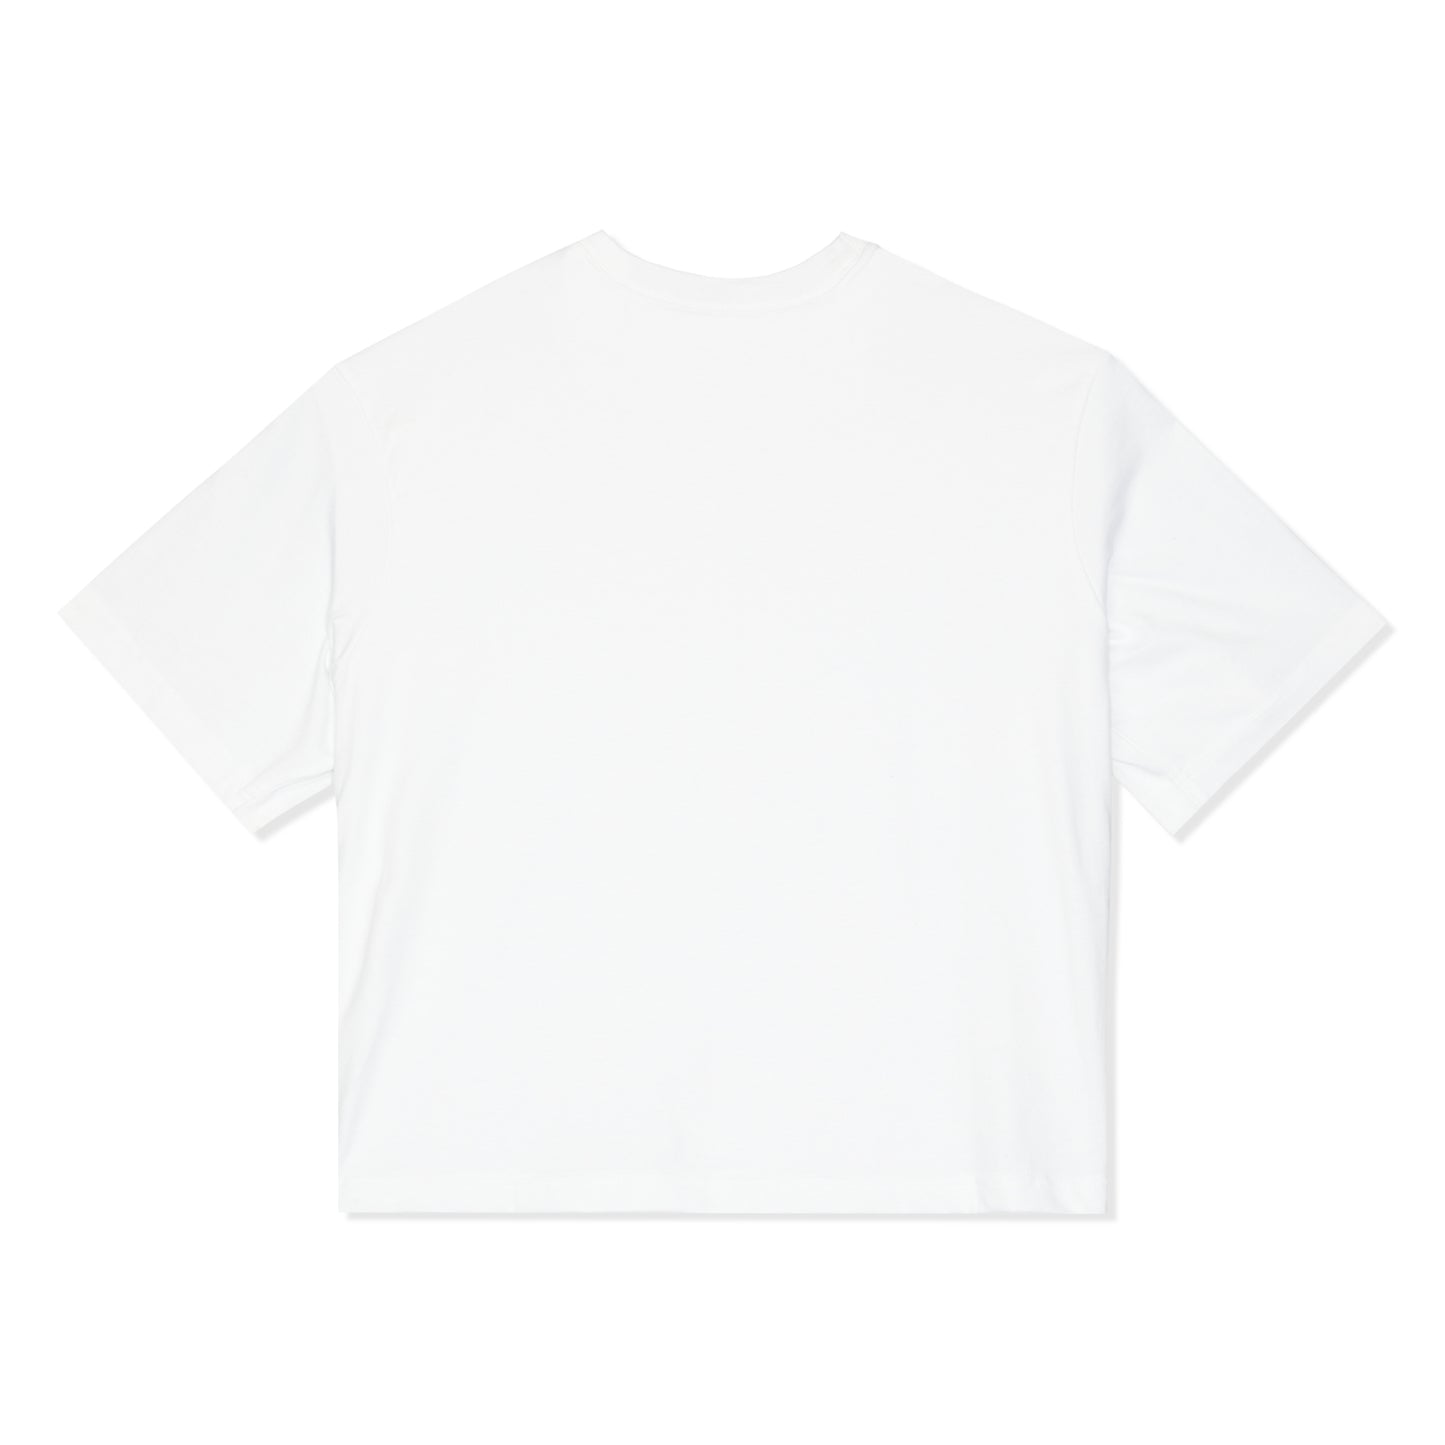 Nike SB T-Shirt (White)